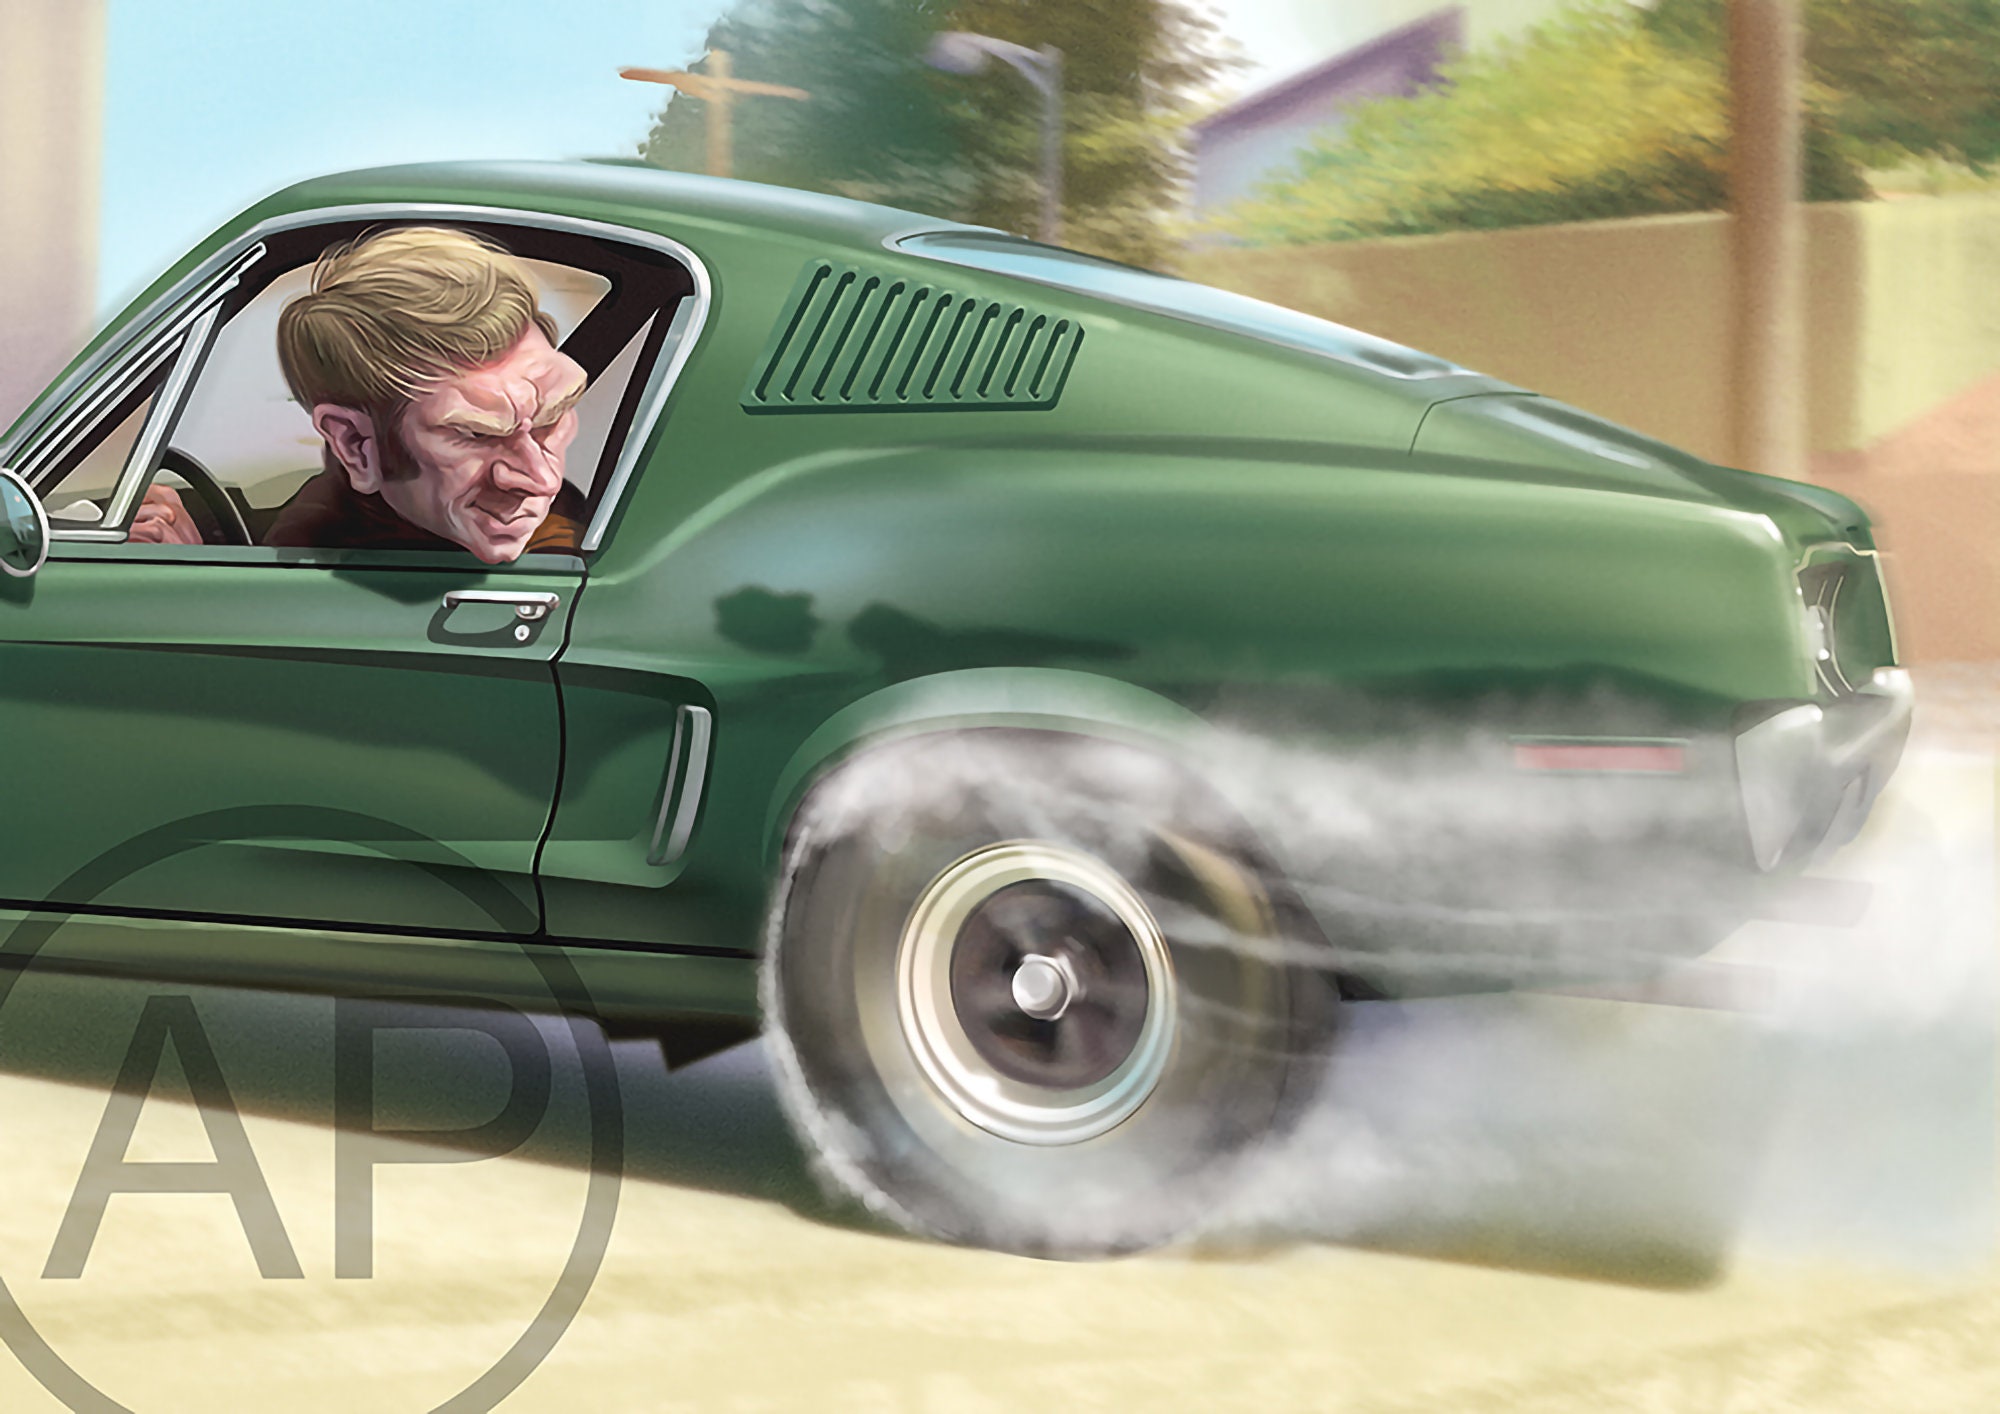 Décapsuleur mural Ford Mustang Fastback classic muscle car Bullitt